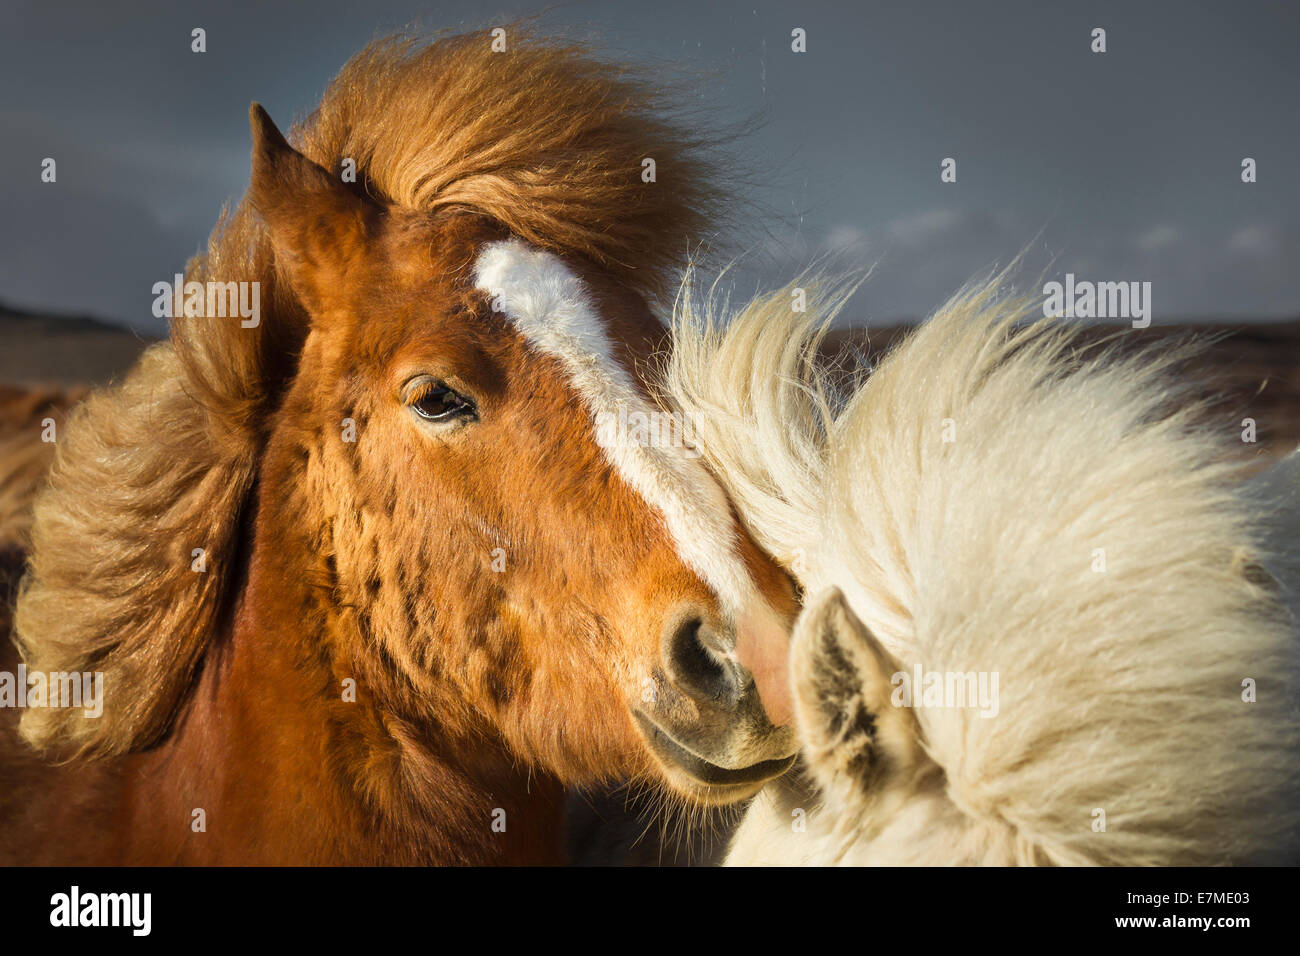 Caballo islandés (Equus ferus caballus) susurrando en la oreja de otro caballo en la península Vatnsnes en Islandia. Foto de stock